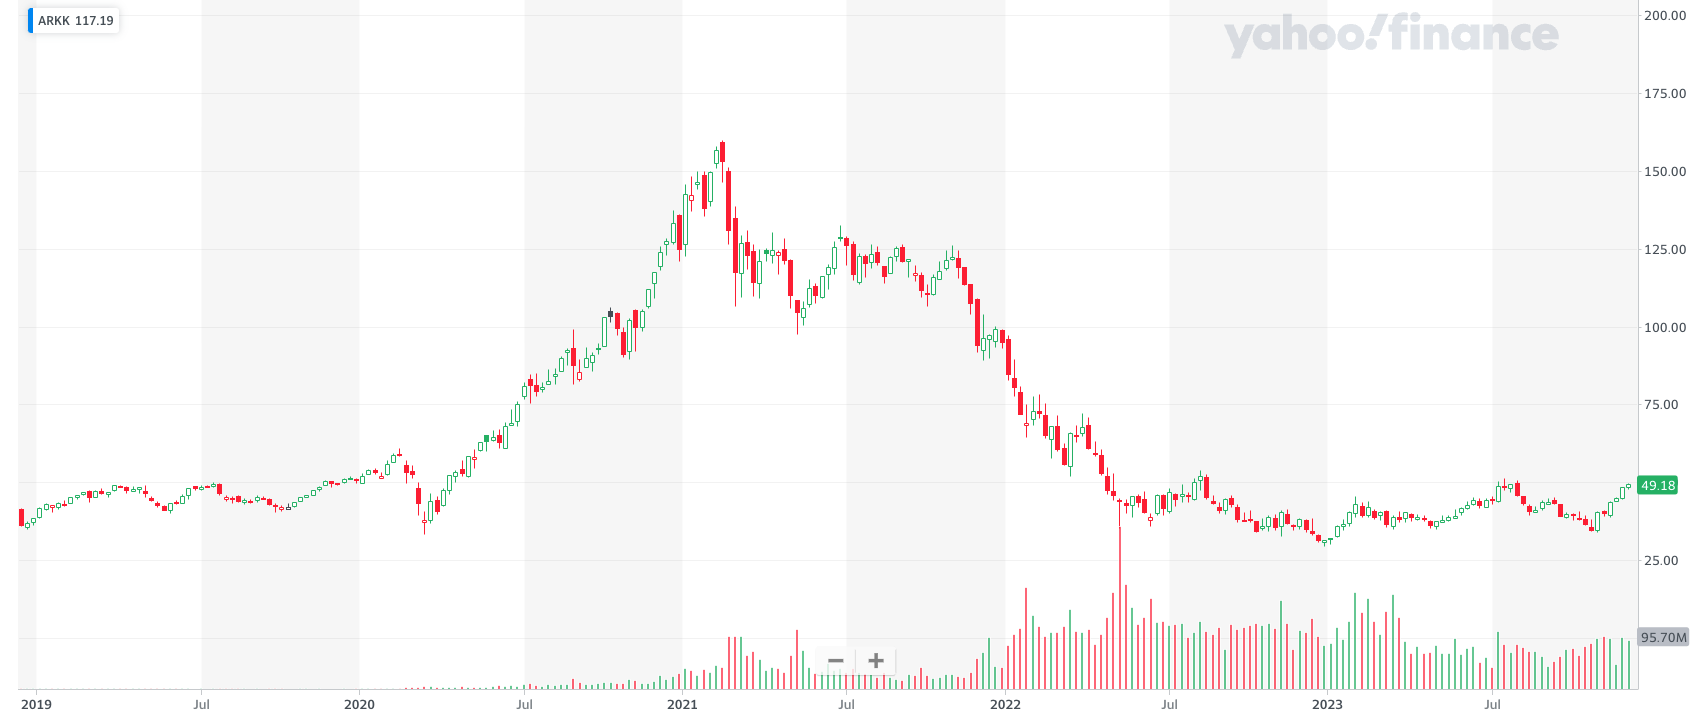 ARKKの株価推移